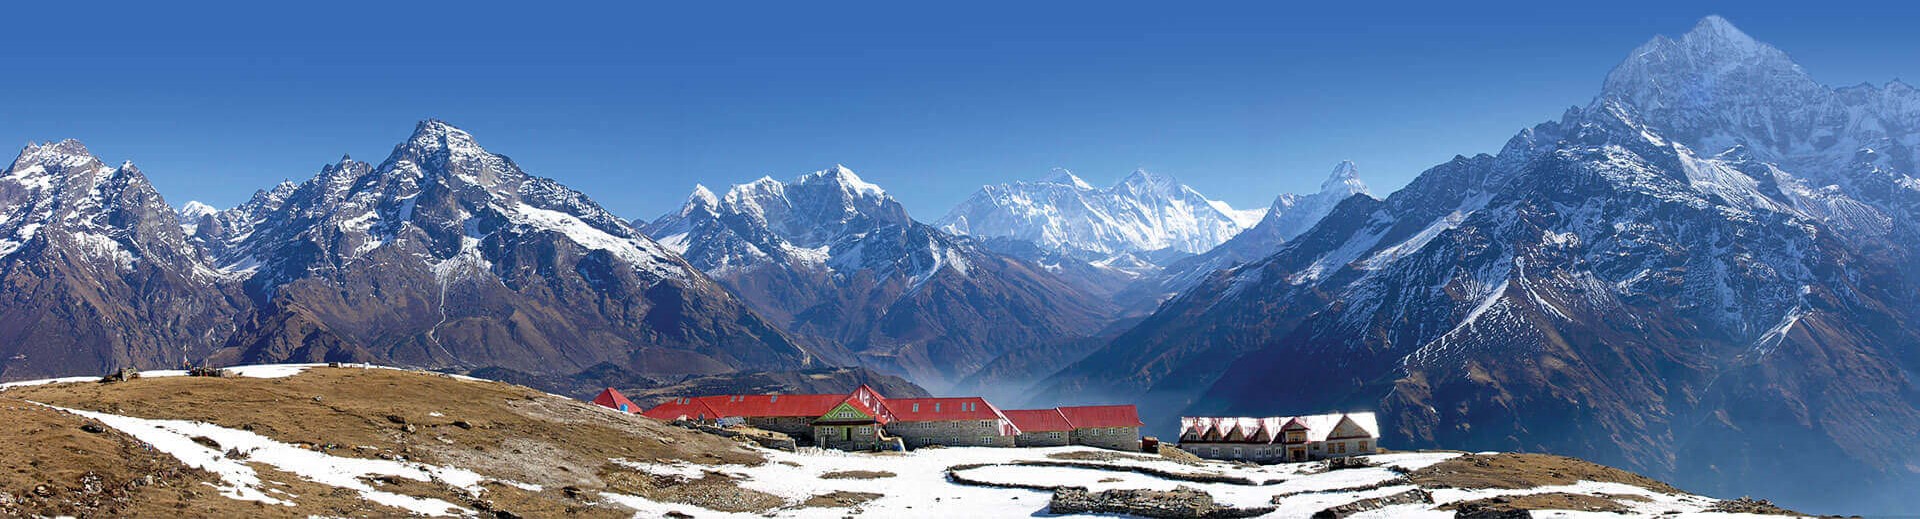 Mountain Lodges of Nepal